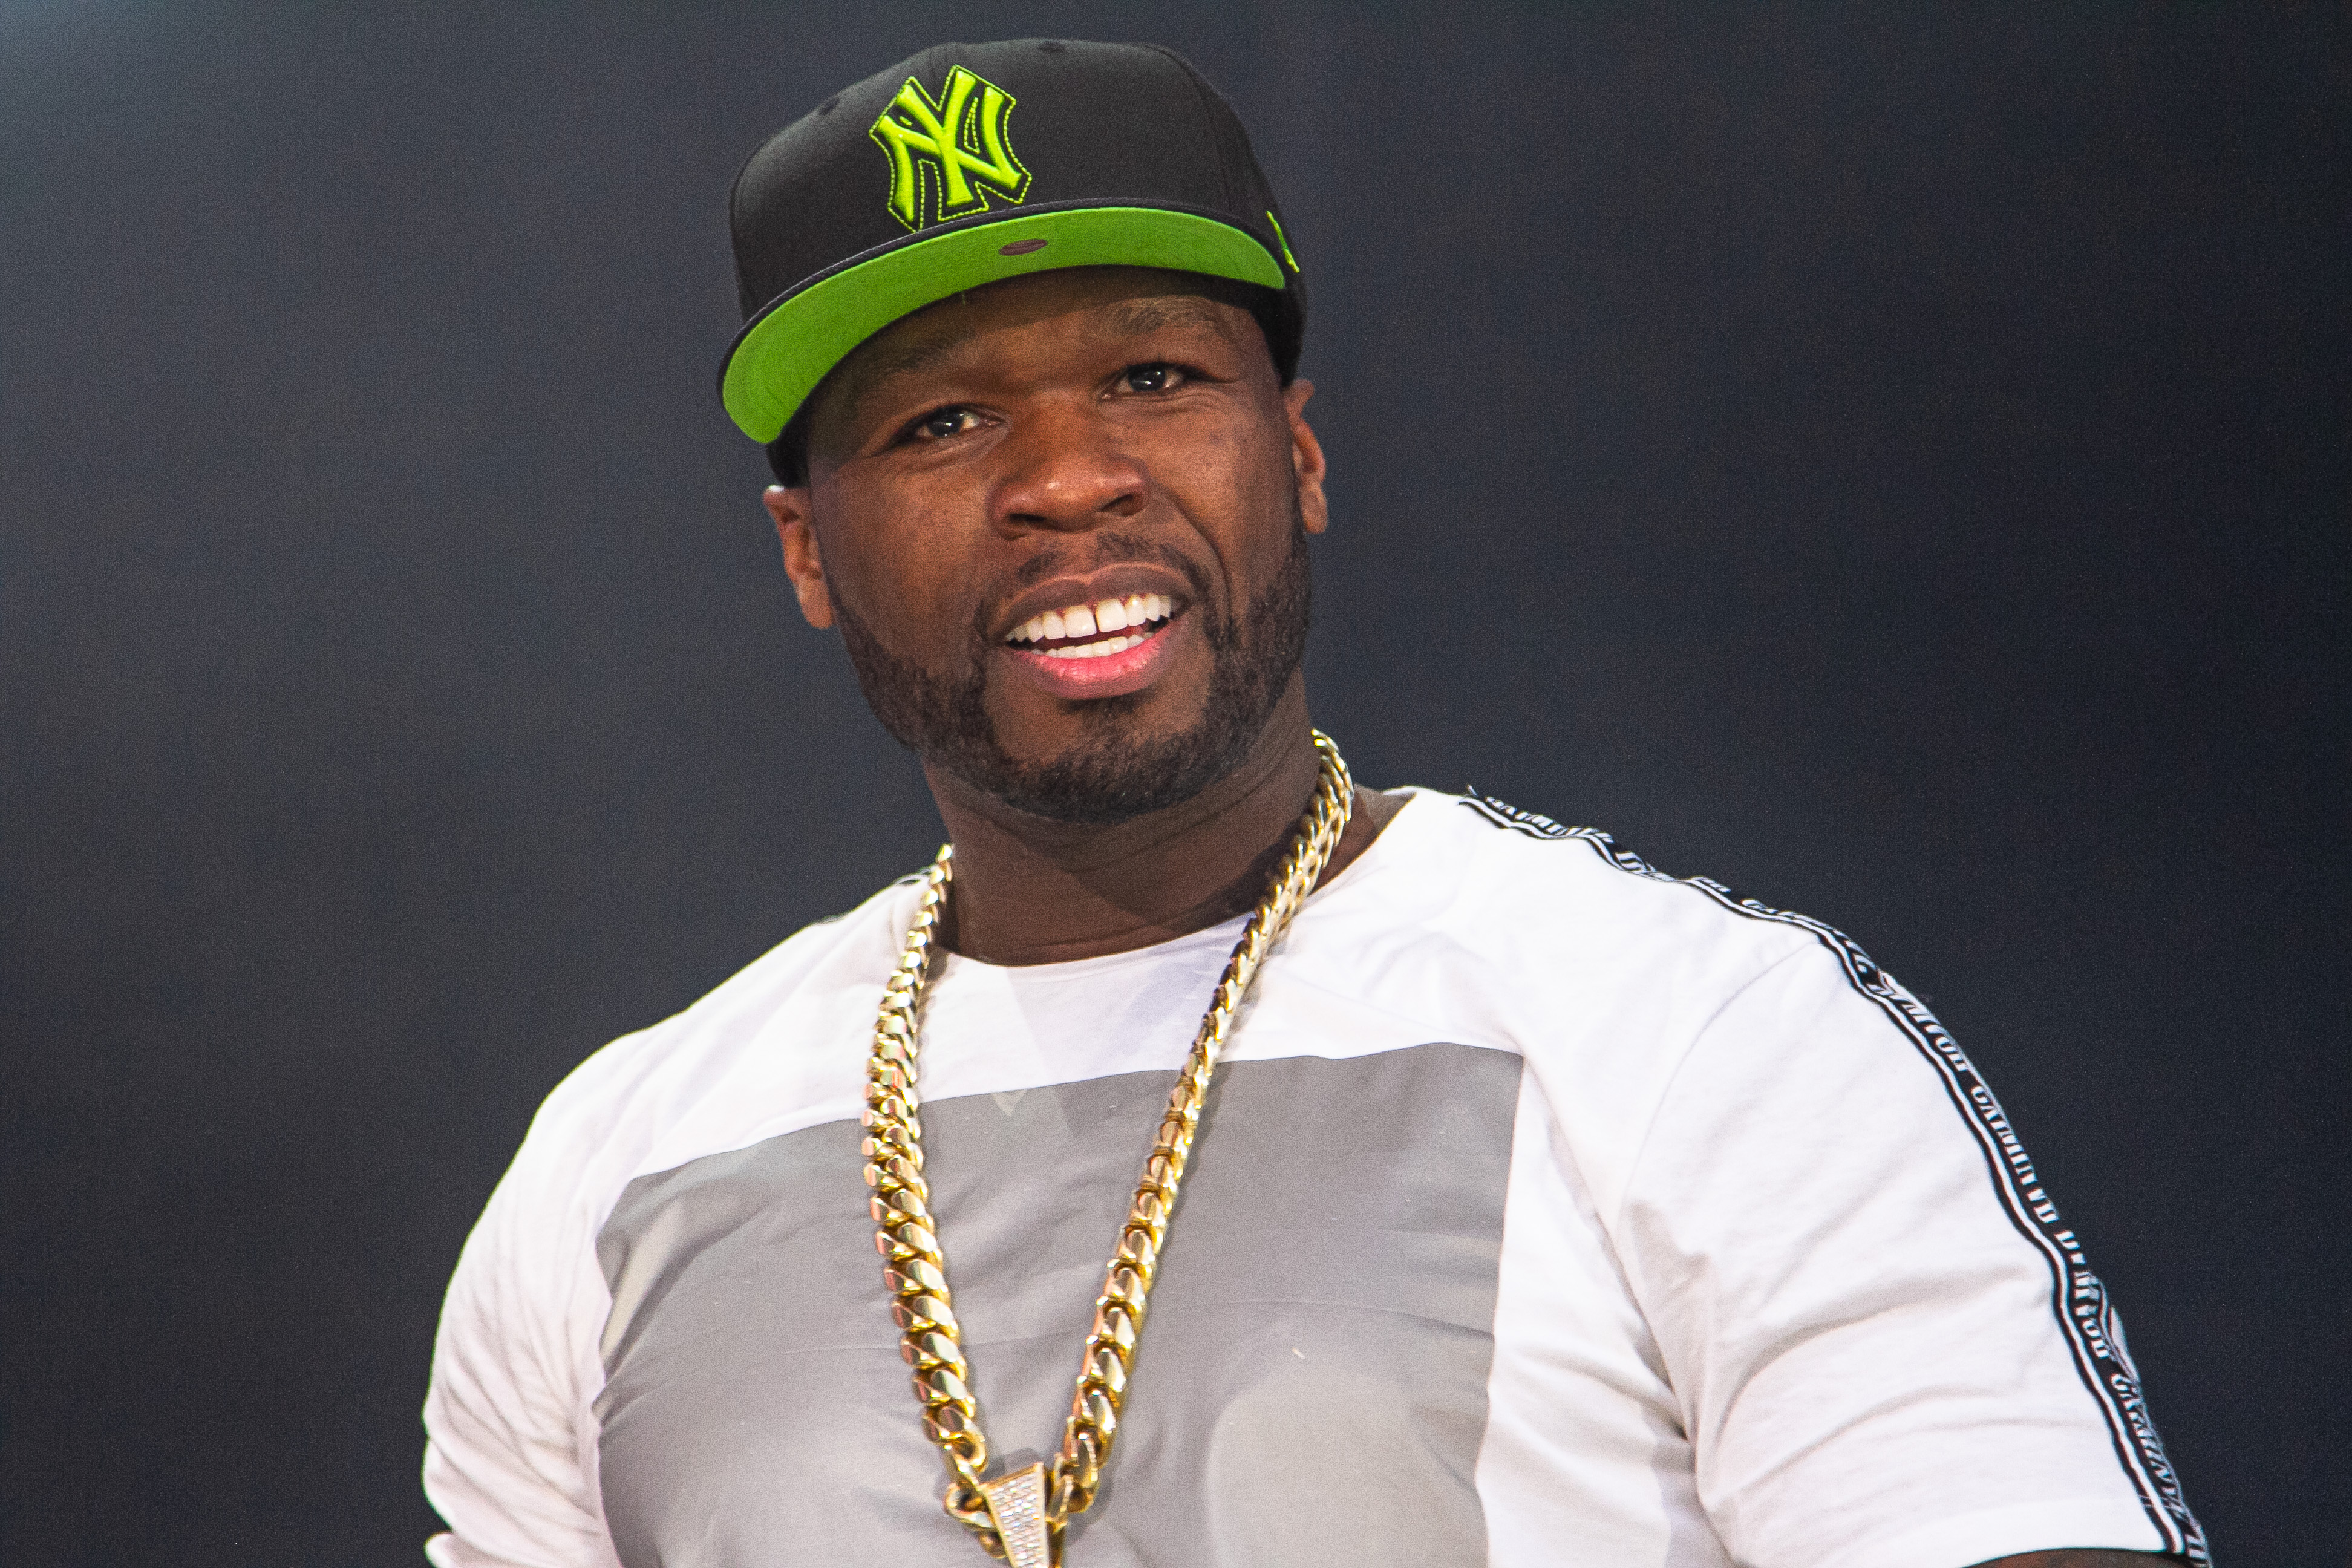 50 Cent says his next album will be his last